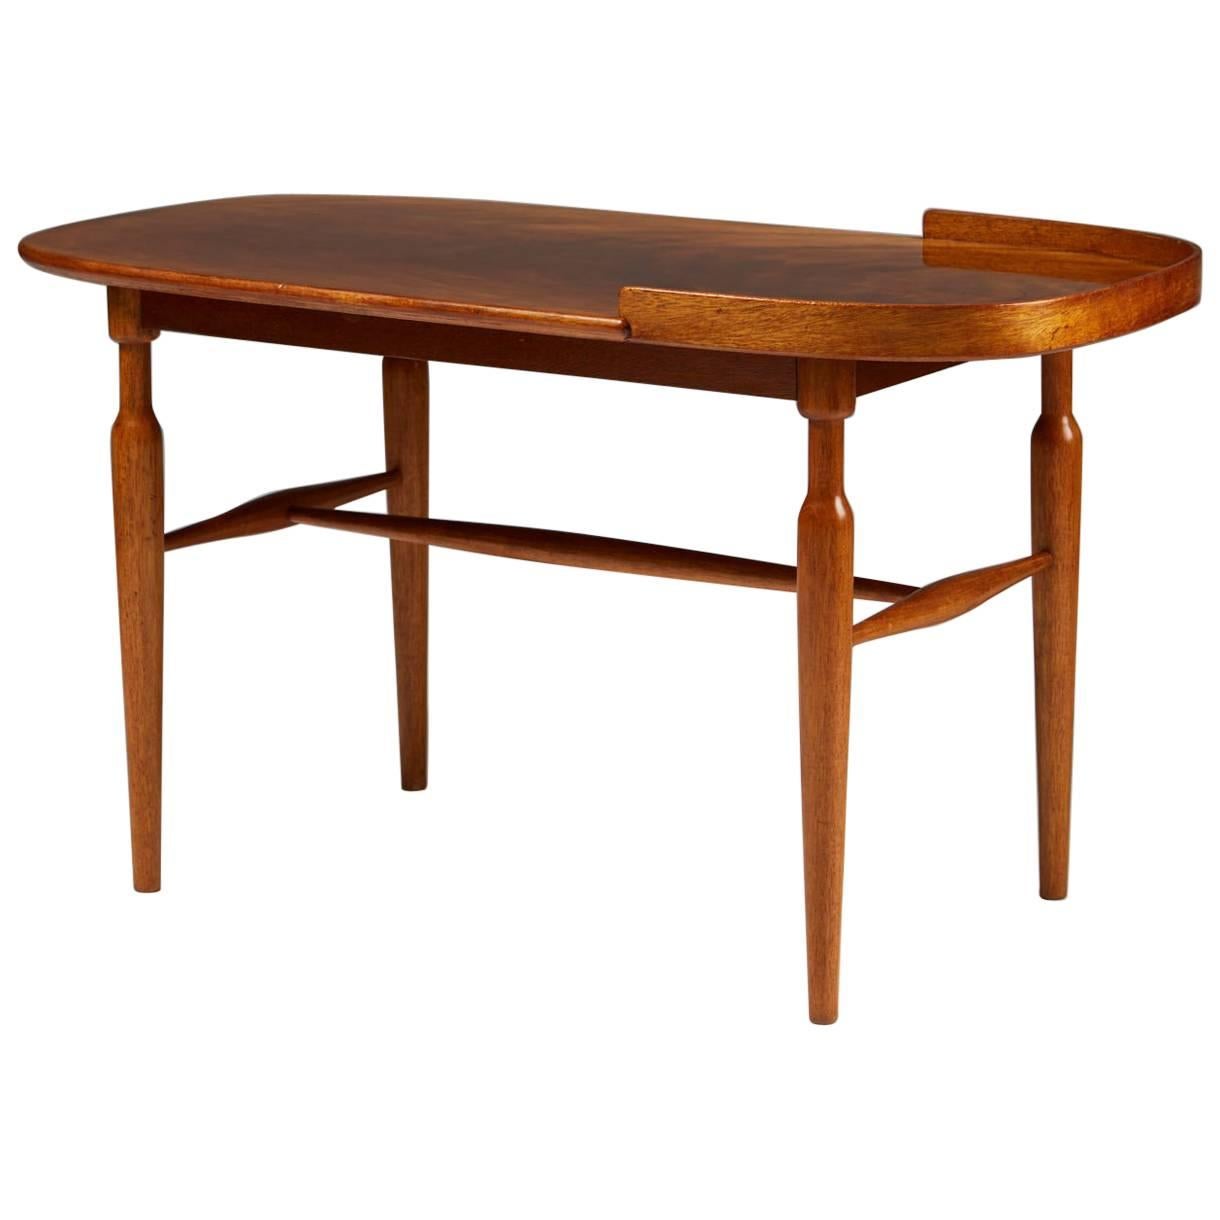 Occasional Table Model 961 Designed by Josef Frank for Svenskt Tenn, Sweden